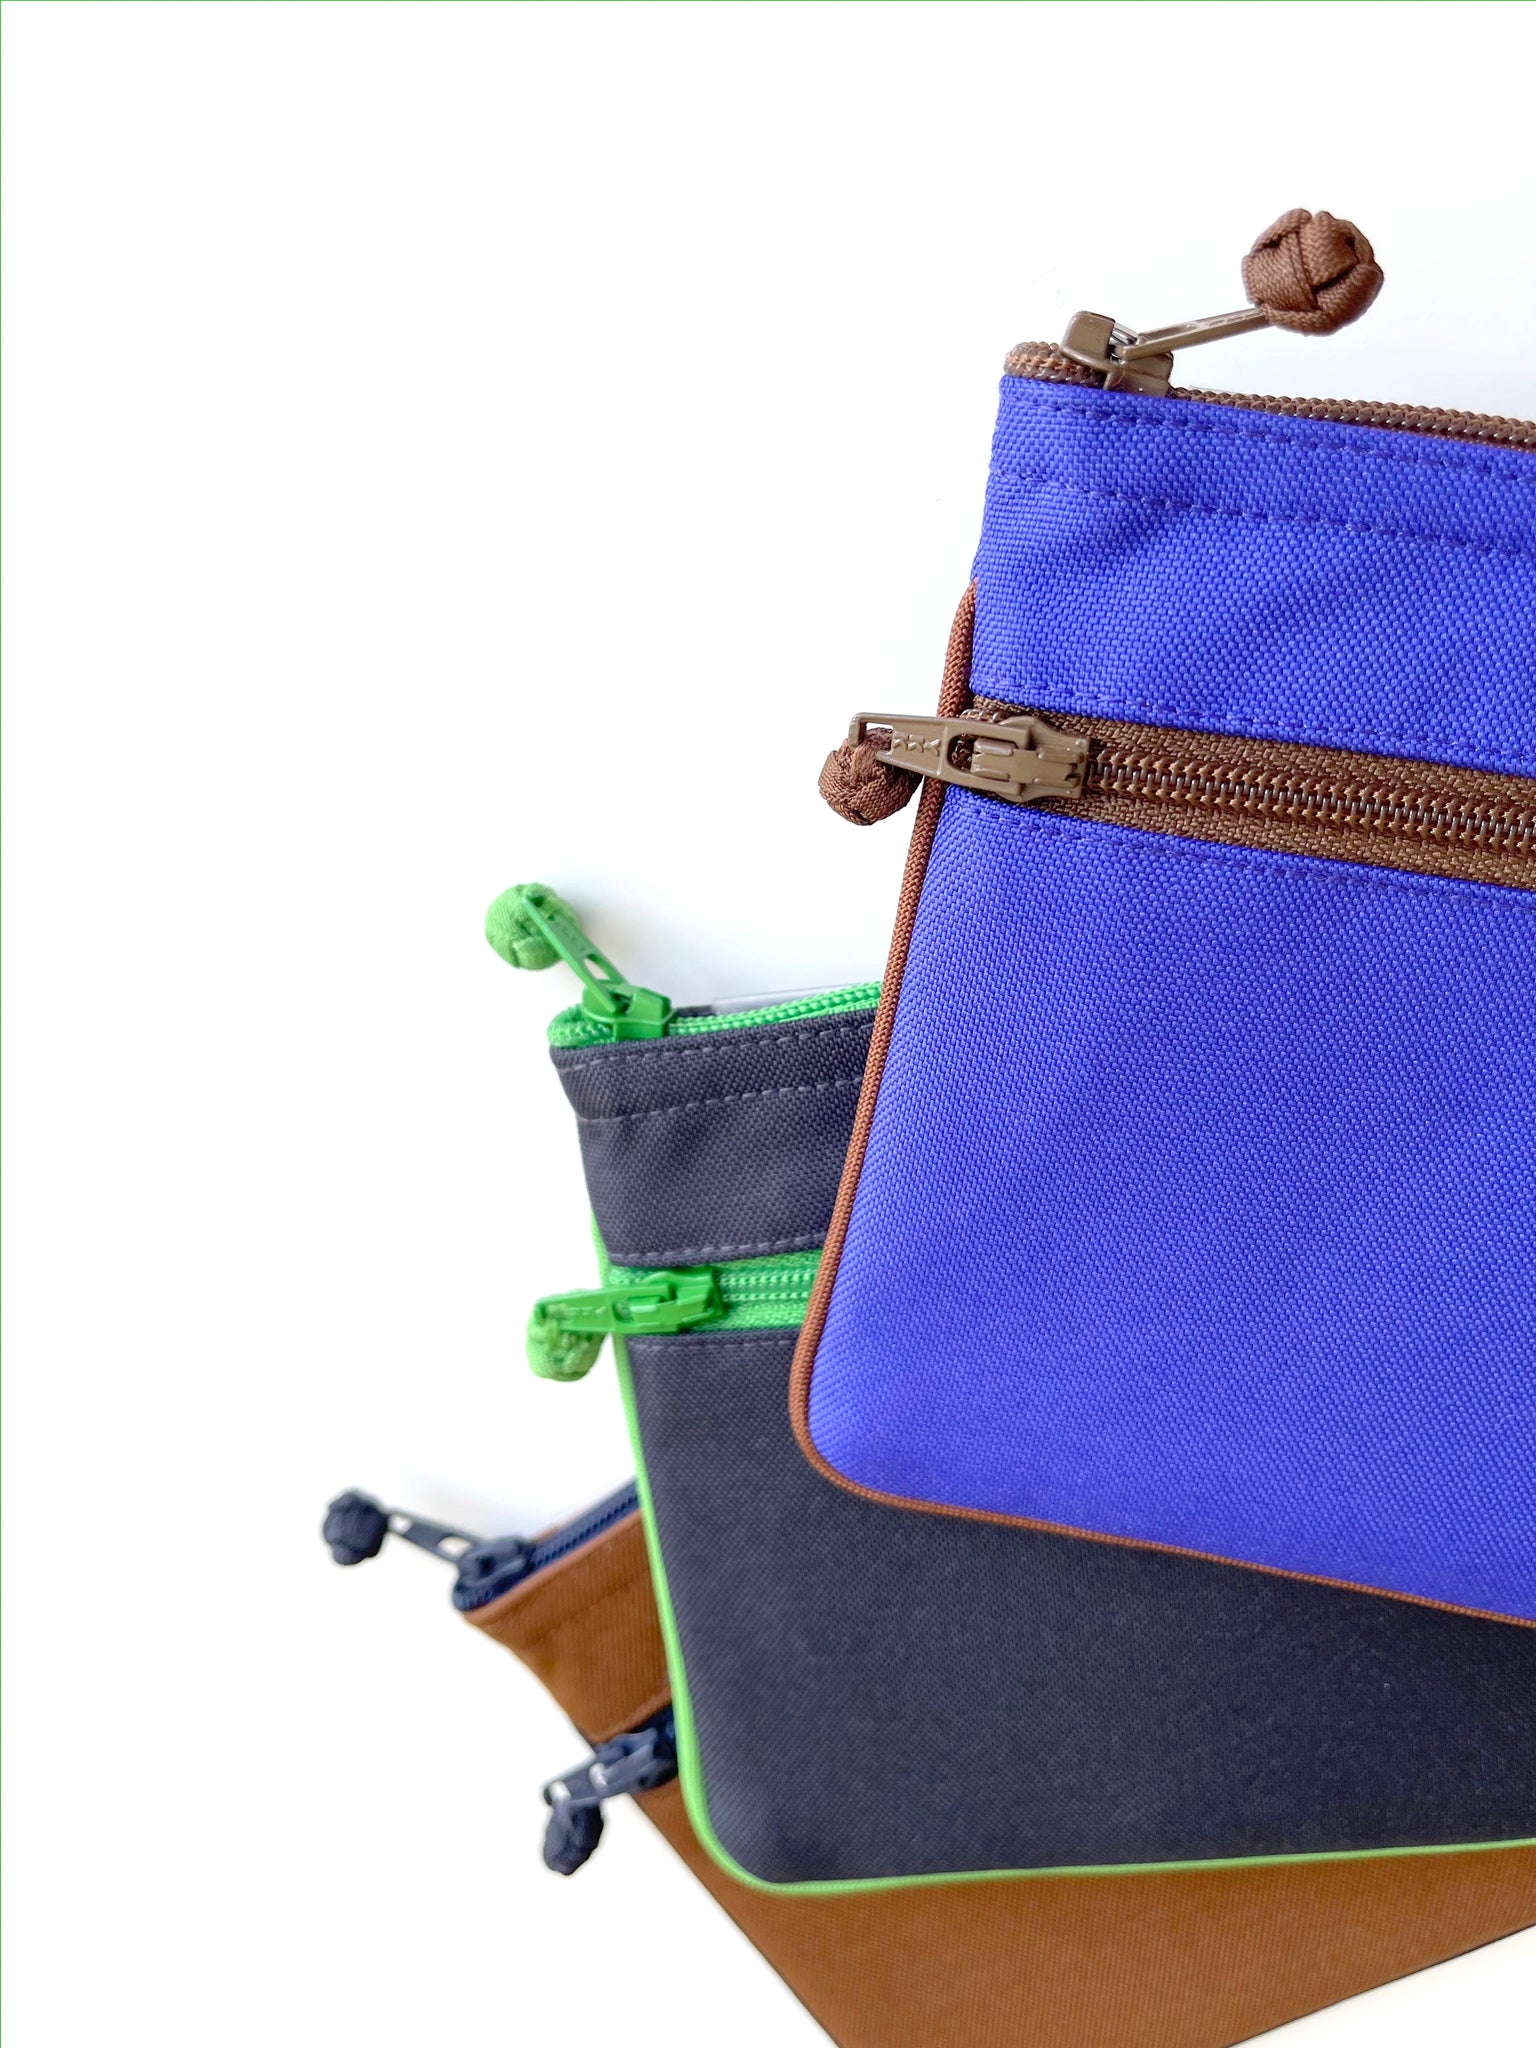 Recycled Multi-functional Double Zipper Wallet/Purse for Men & Women